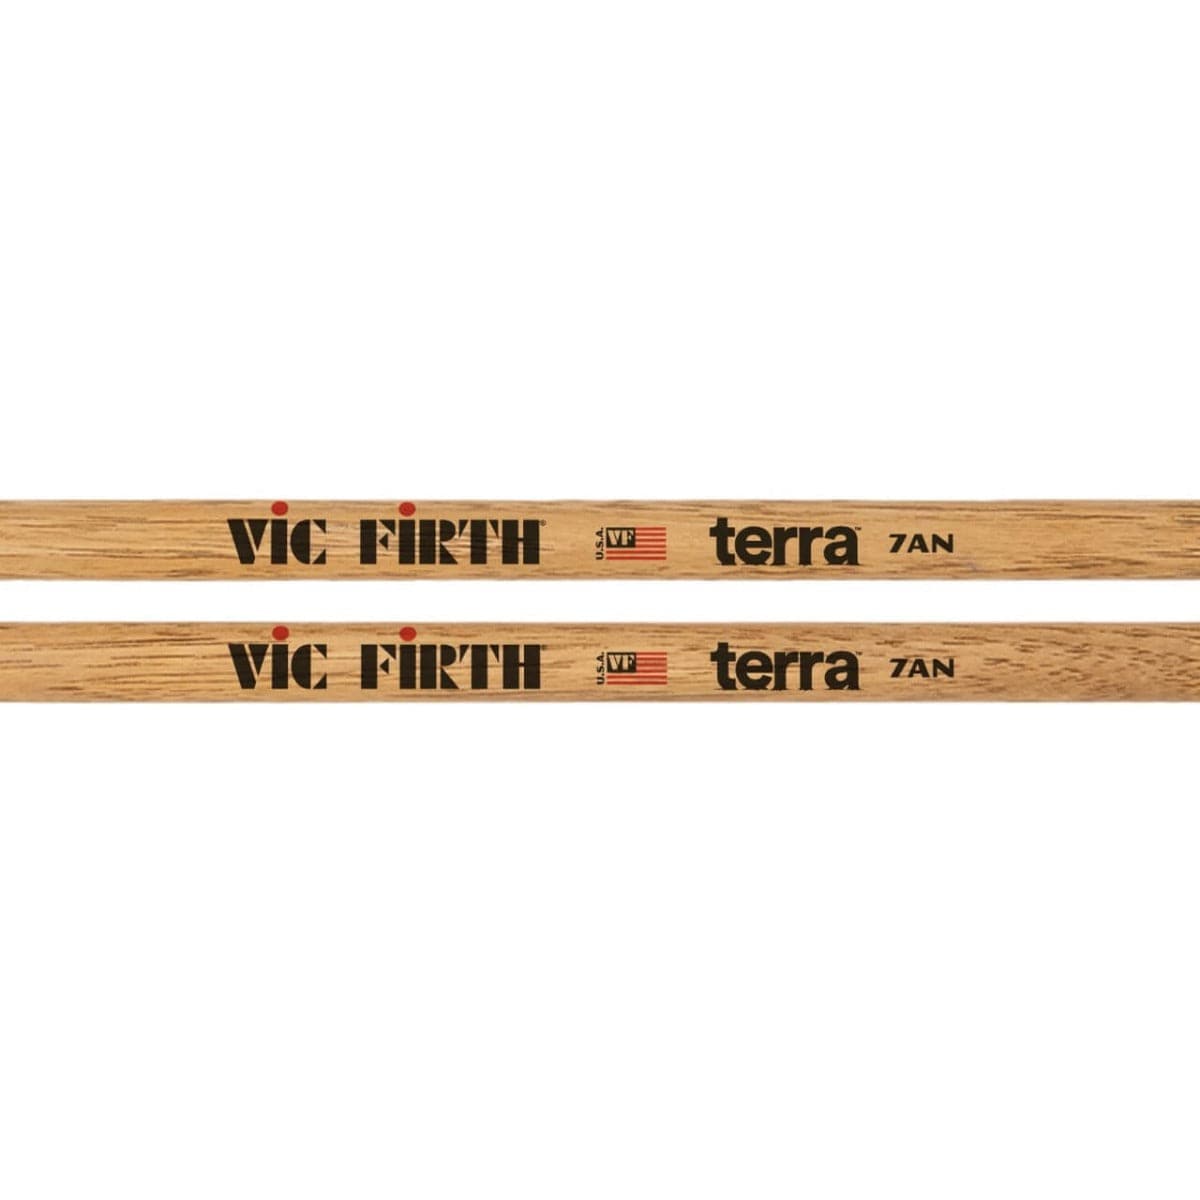 Vic Firth American Classic 7ATN Terra Series Drumsticks, Nylon Tip